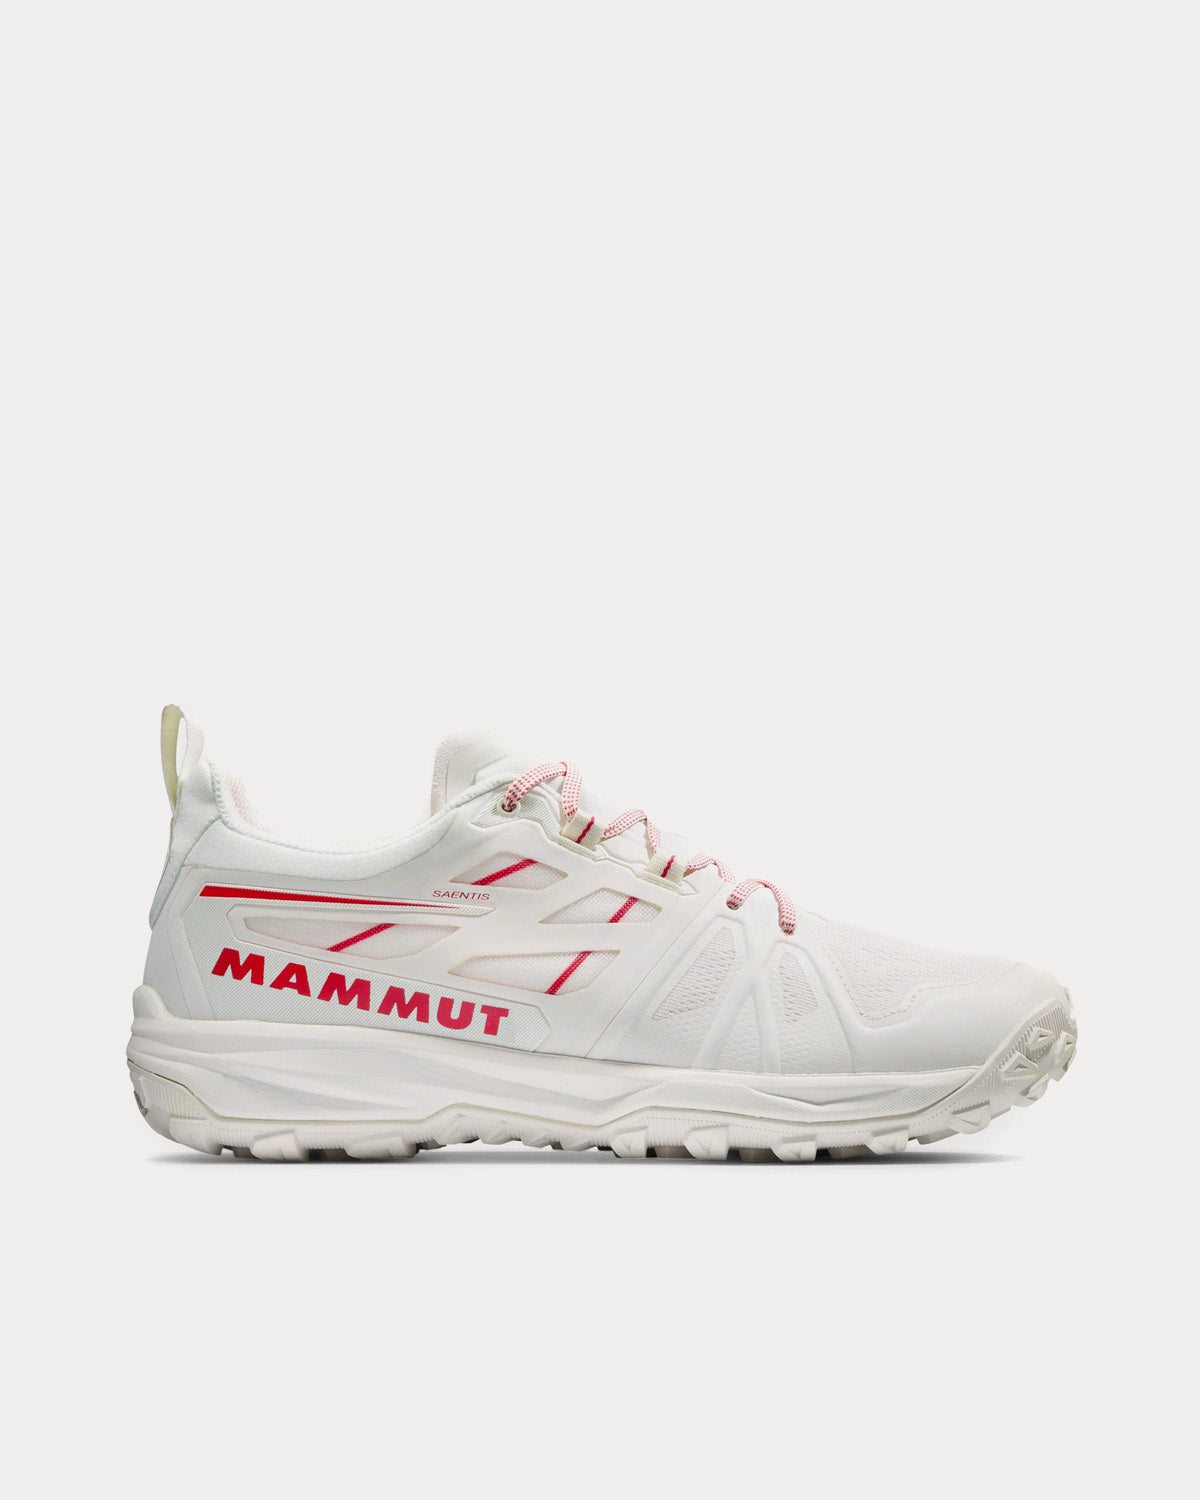 Mammut - Saentis Low White / Magma Running Shoes